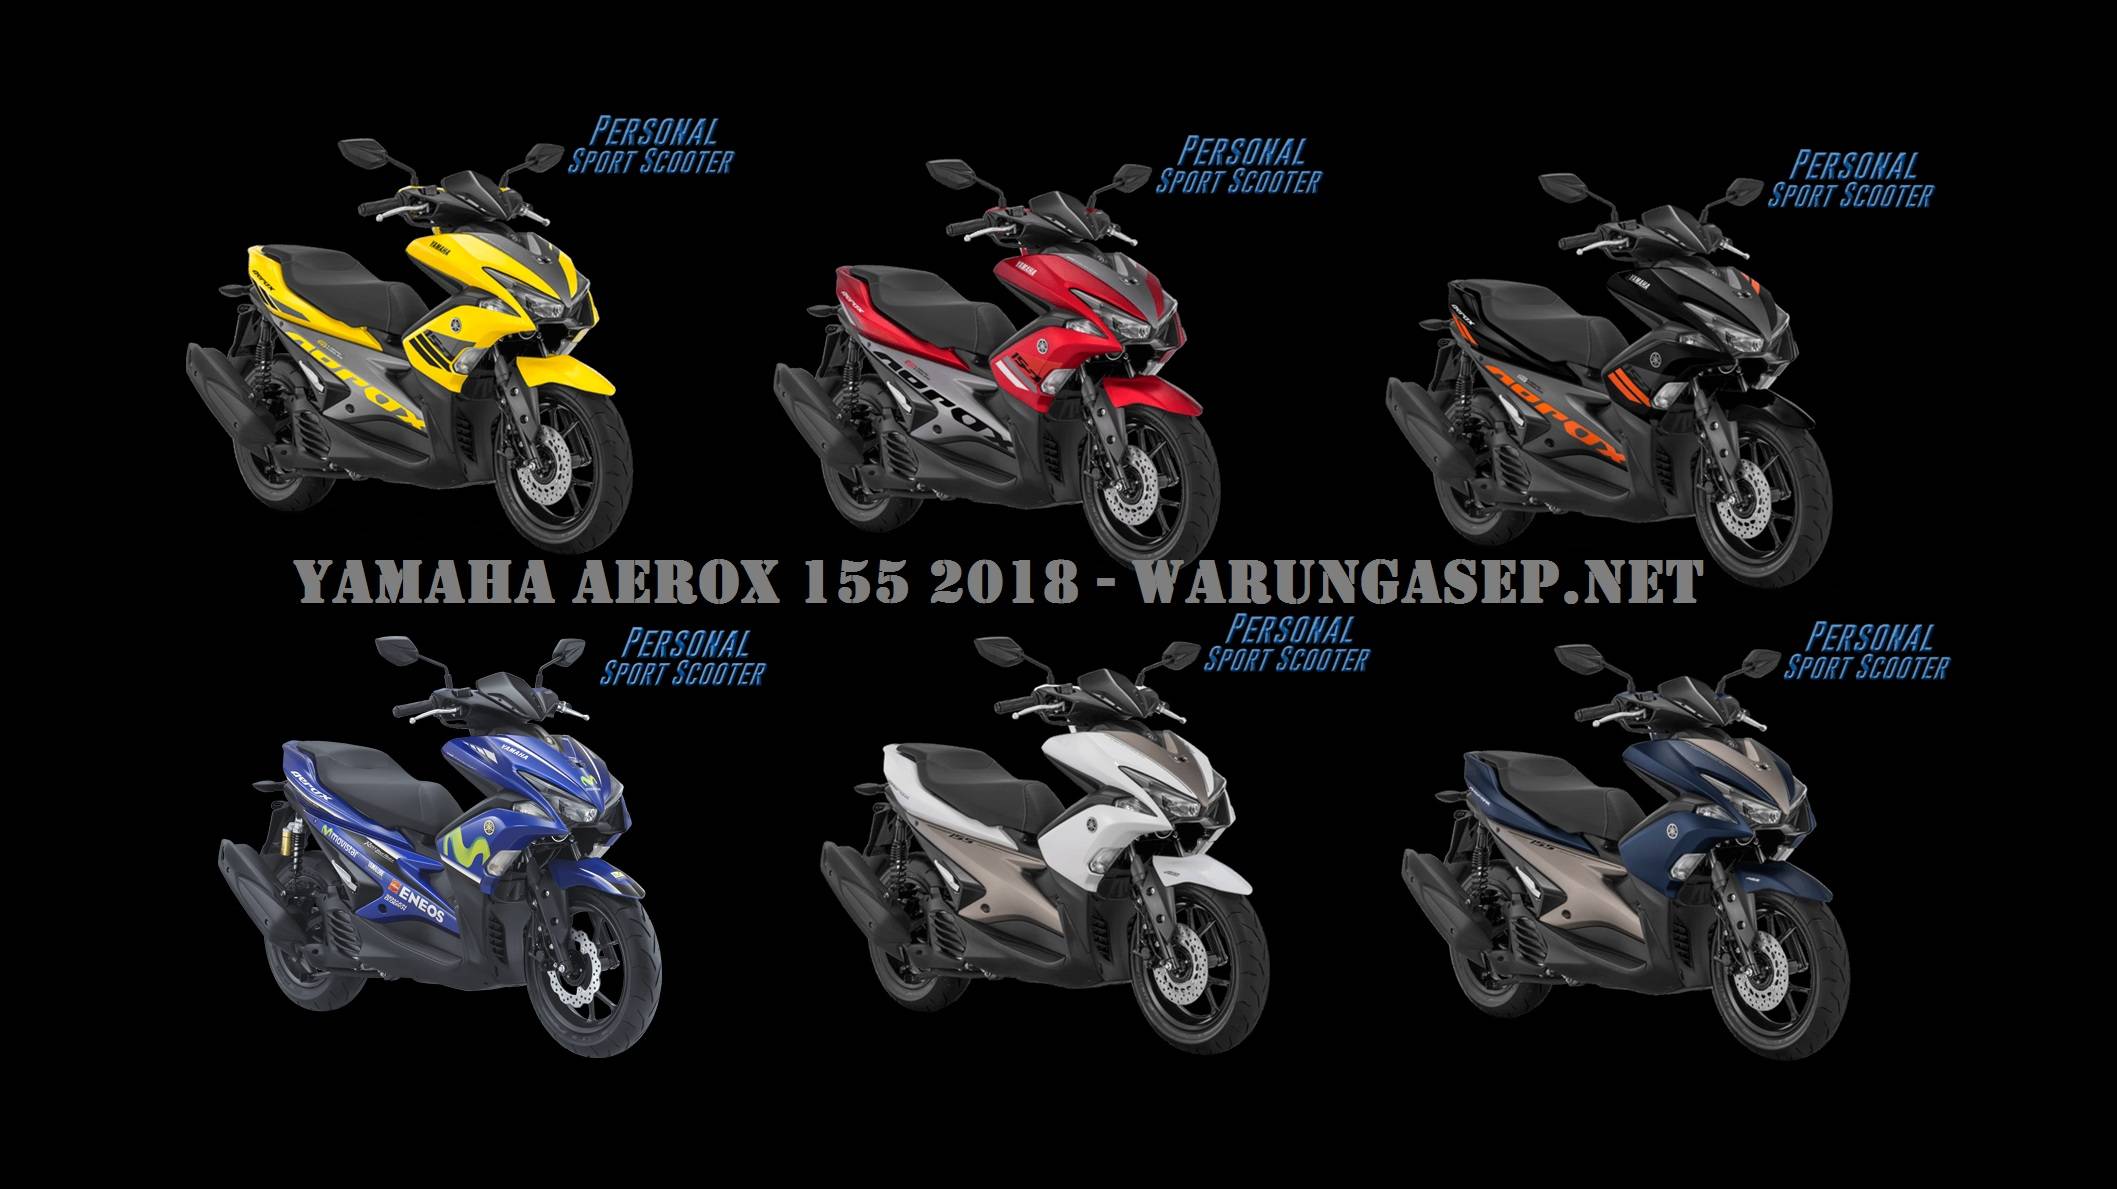 Yamaha Aerox 2018 Ada 6 Warna Baru Harga Termurah Rp 22850000